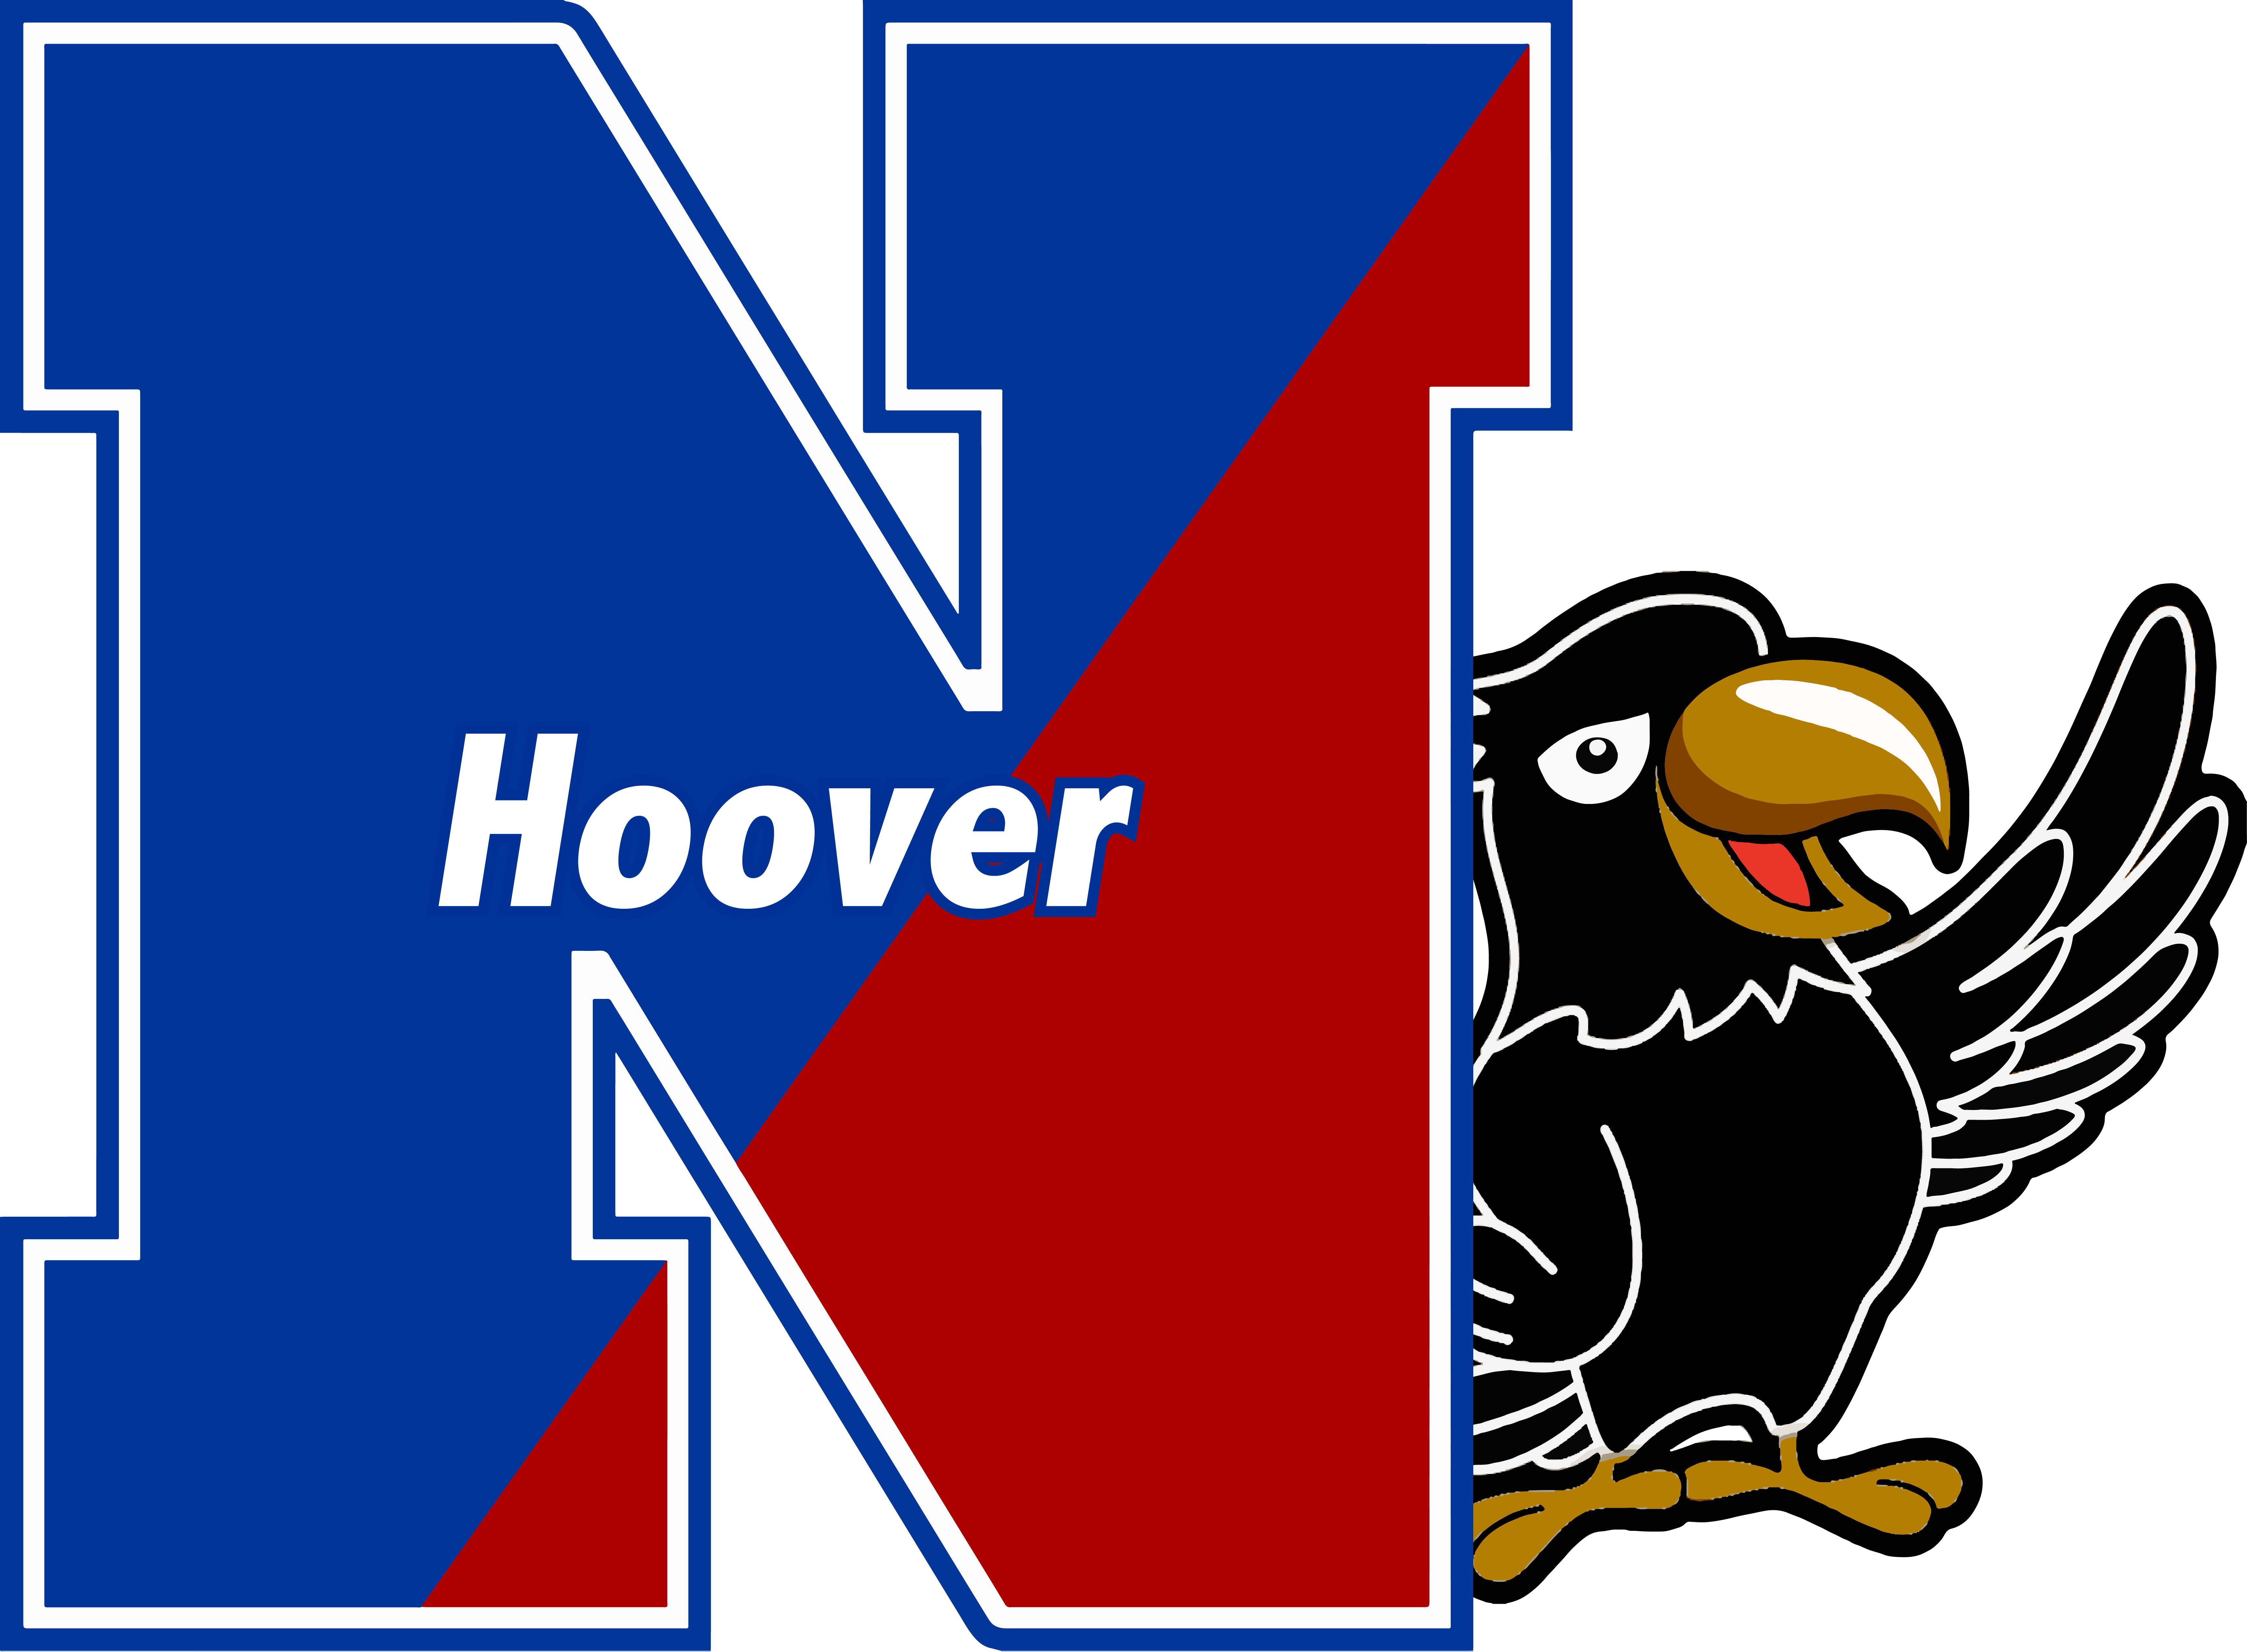 Herbert Hoover Es Logo With Mascot - Hoover Elementary School Pa (6880x5059)